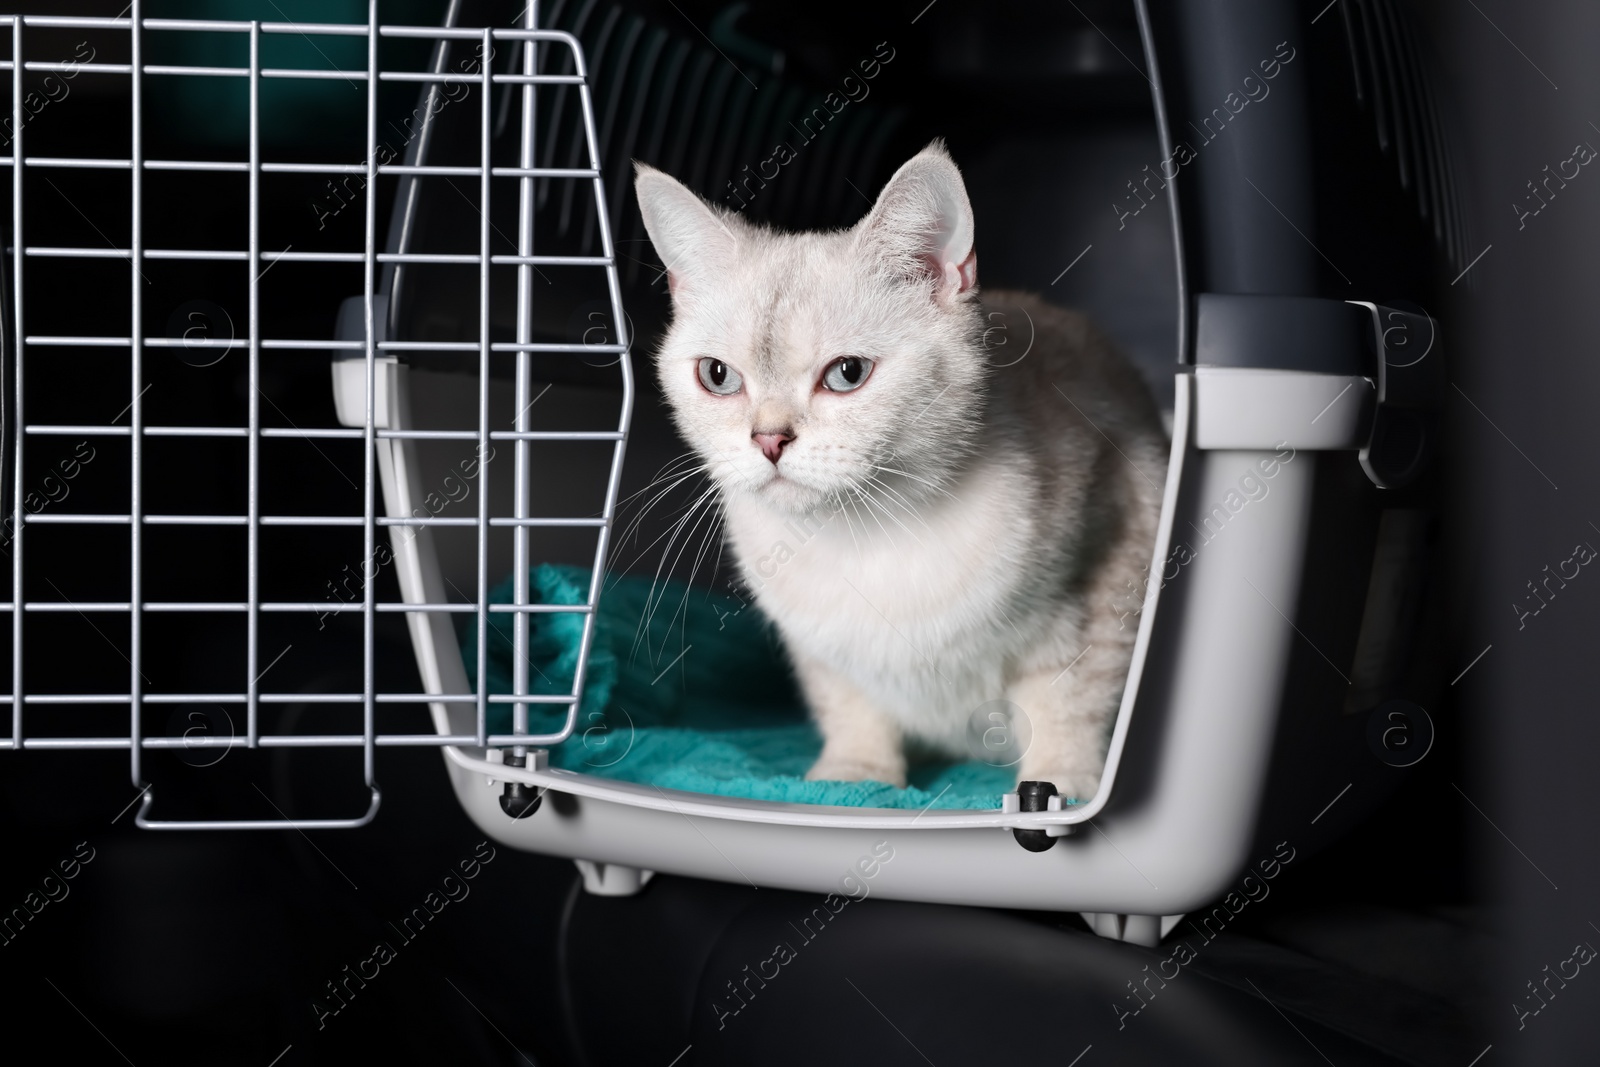 Photo of Cute white British Shorthair cat inside pet carrier